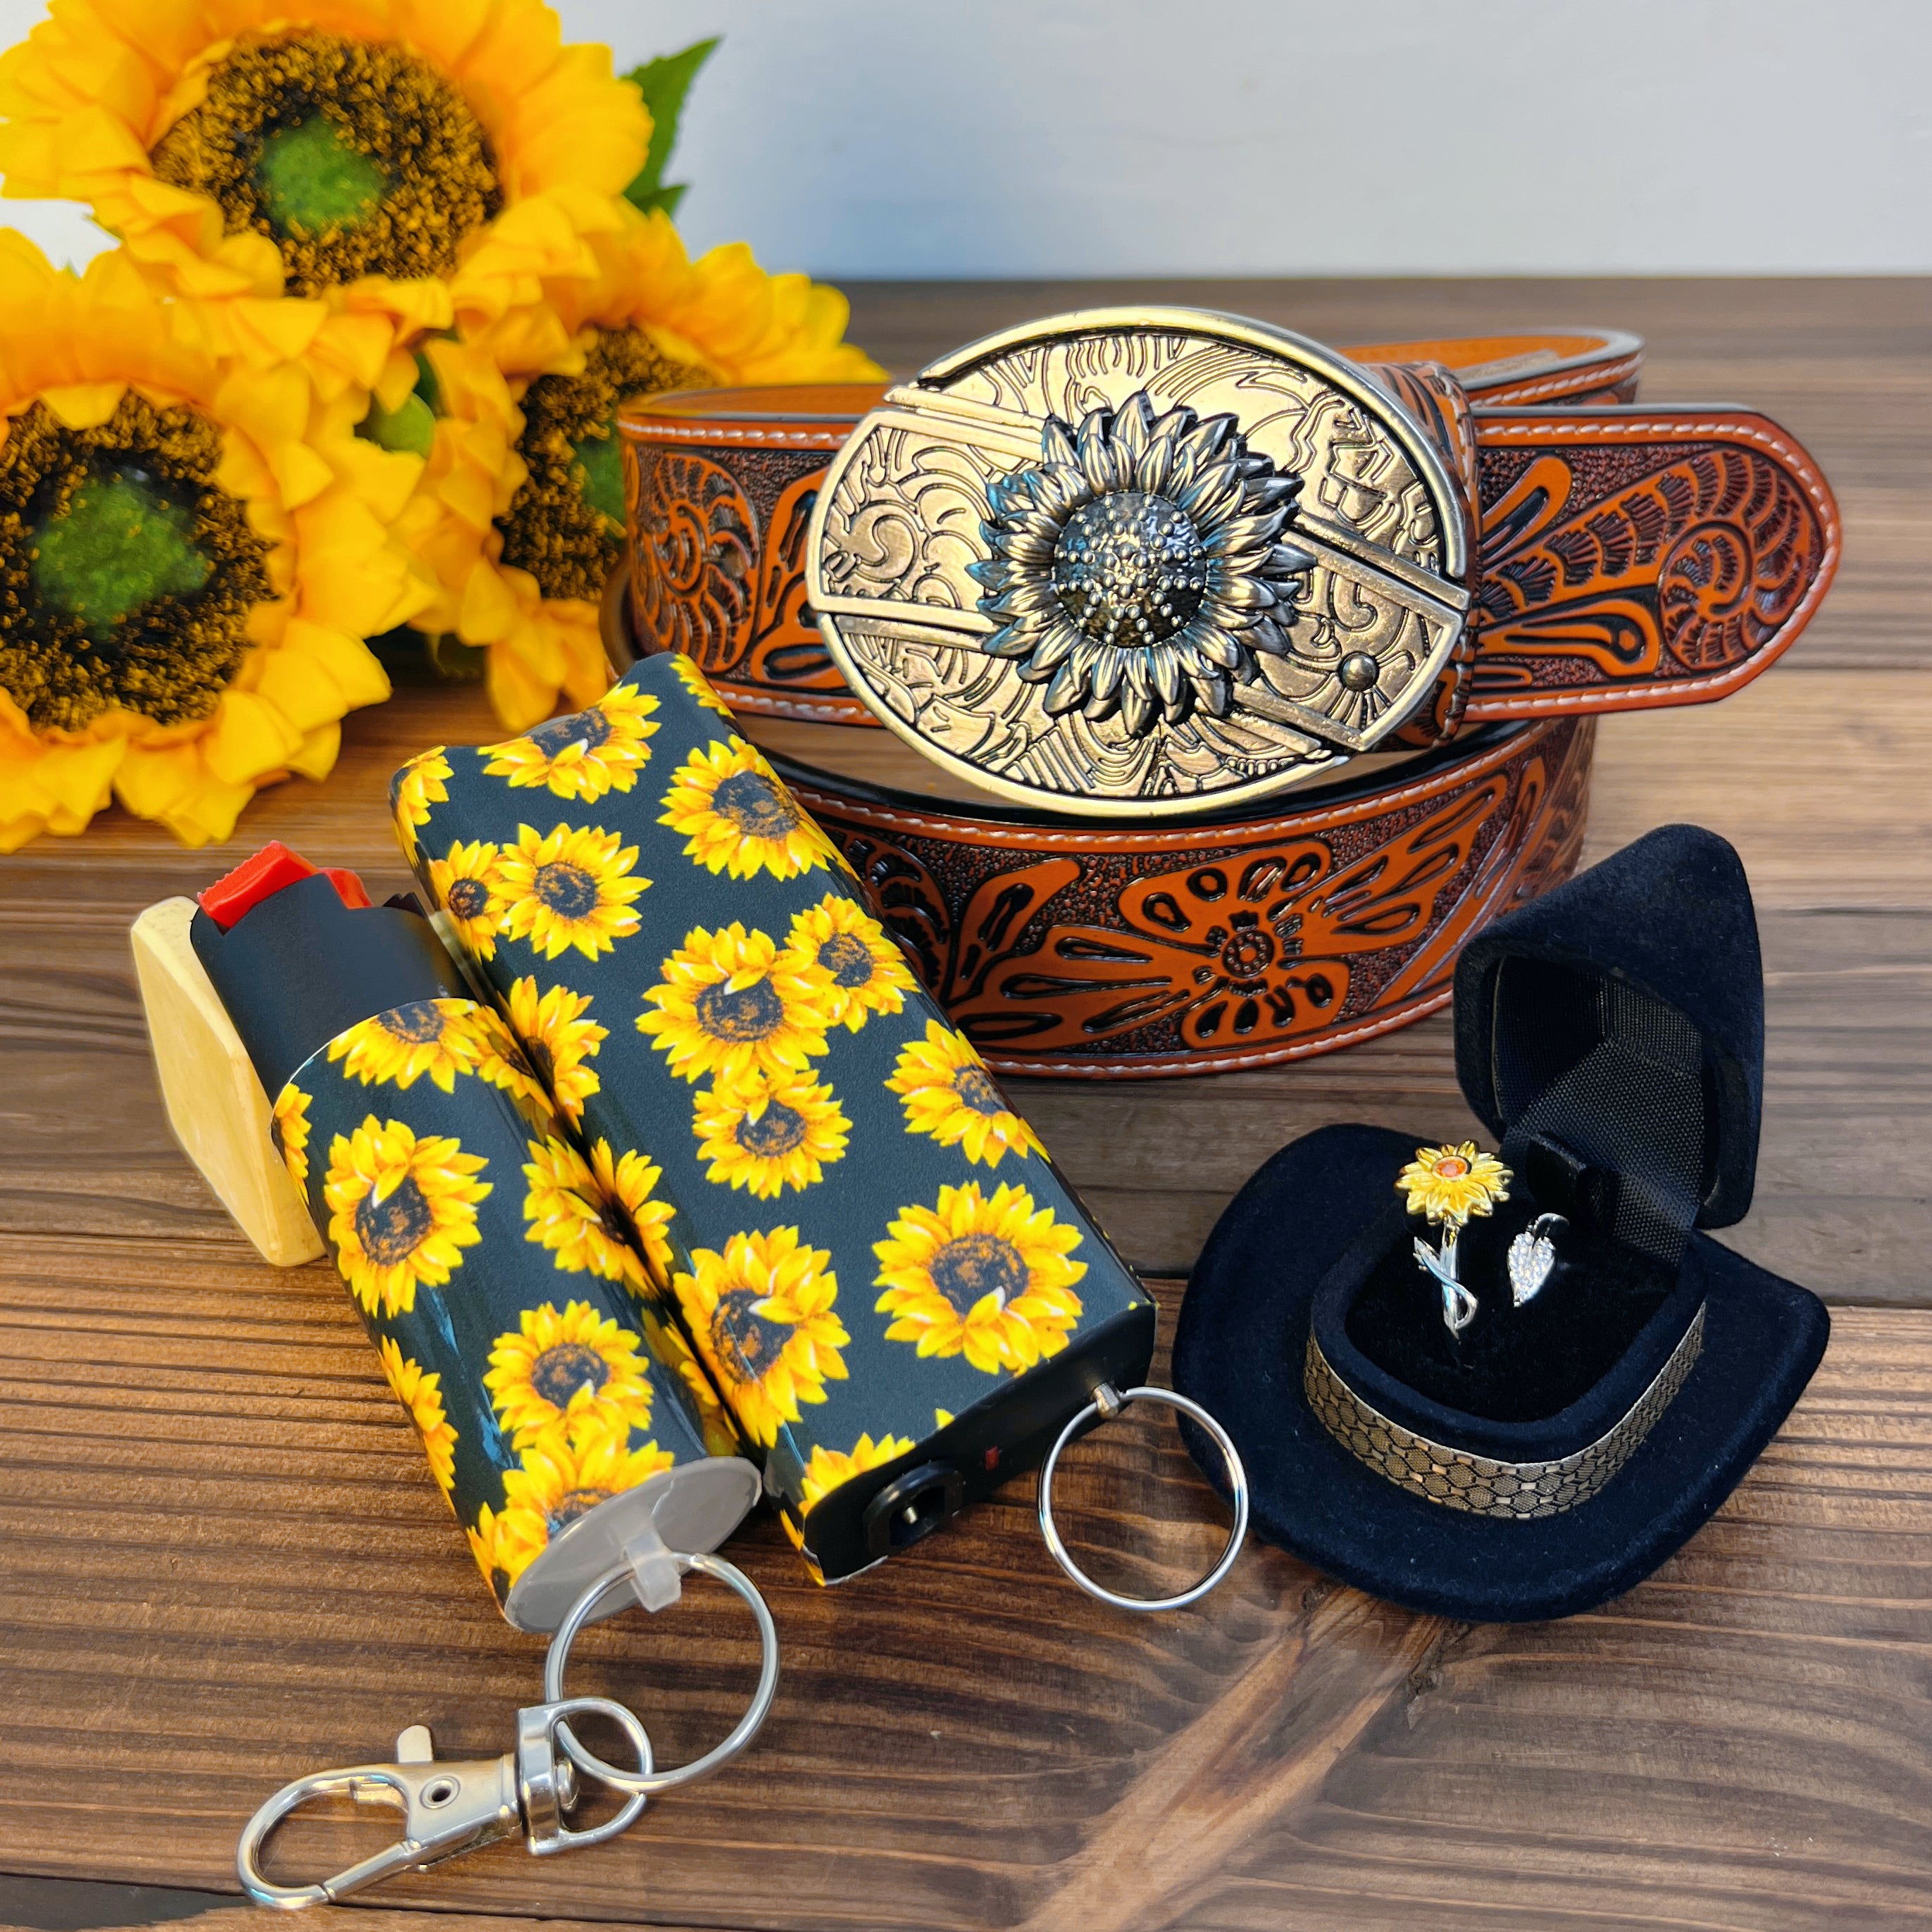 Sunflower Self-defense Set